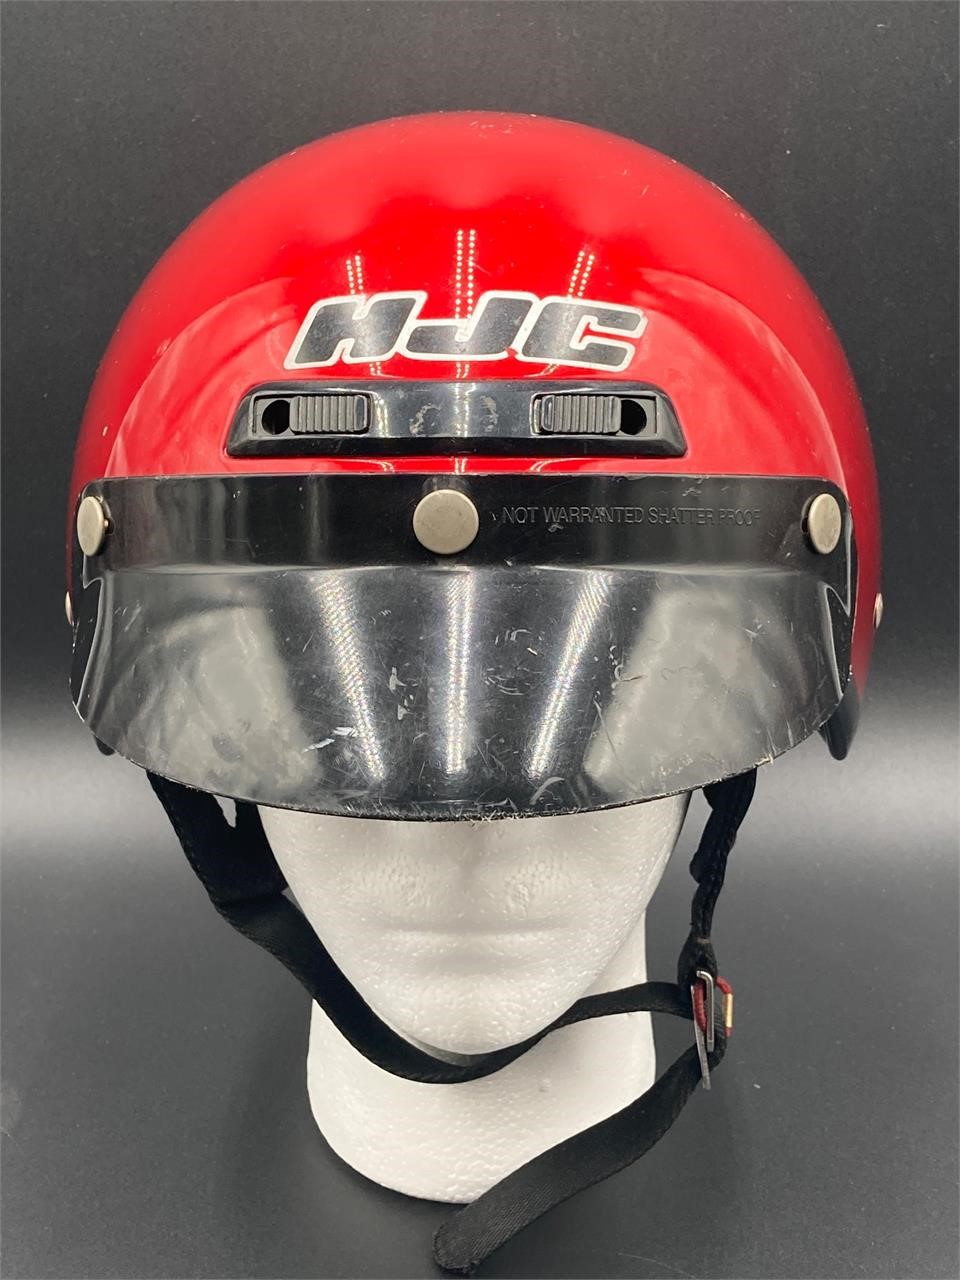 HJC CL-2 Half Helmet With Visor